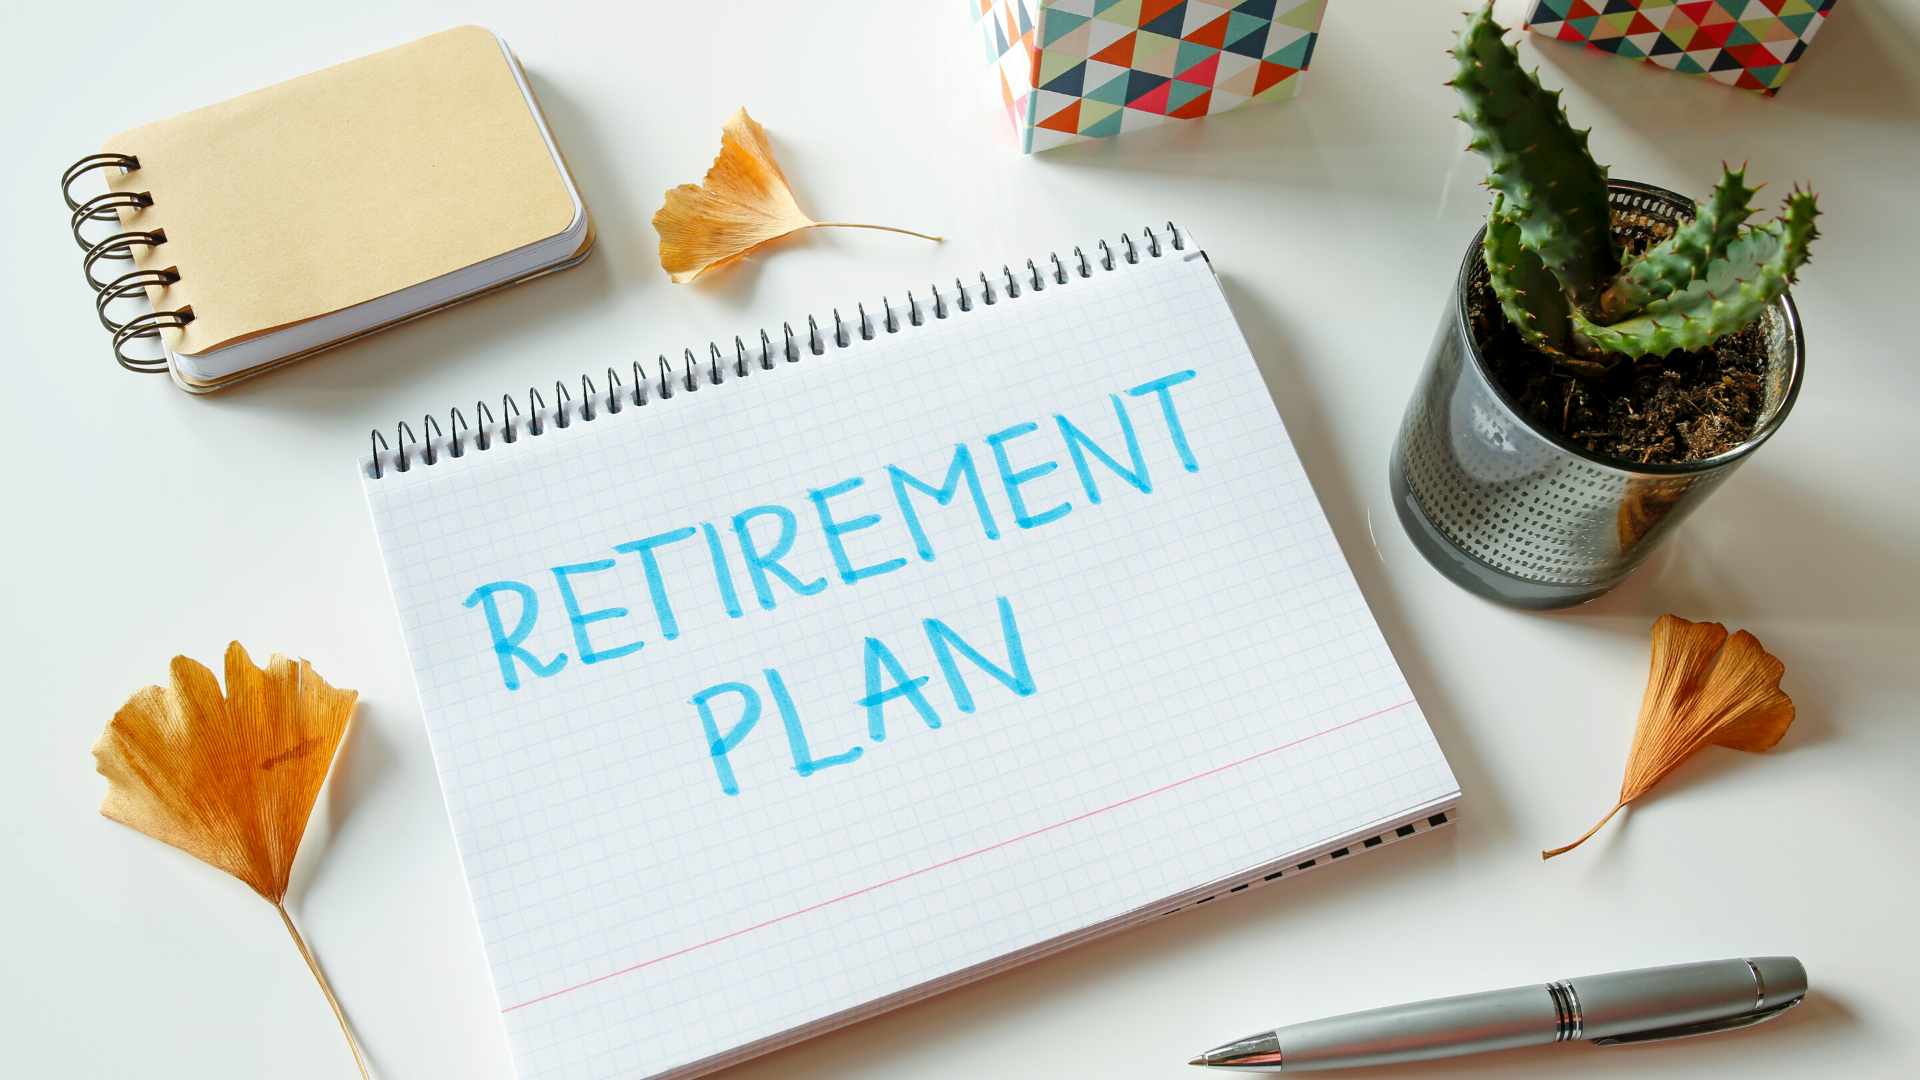 Plan for Retirement